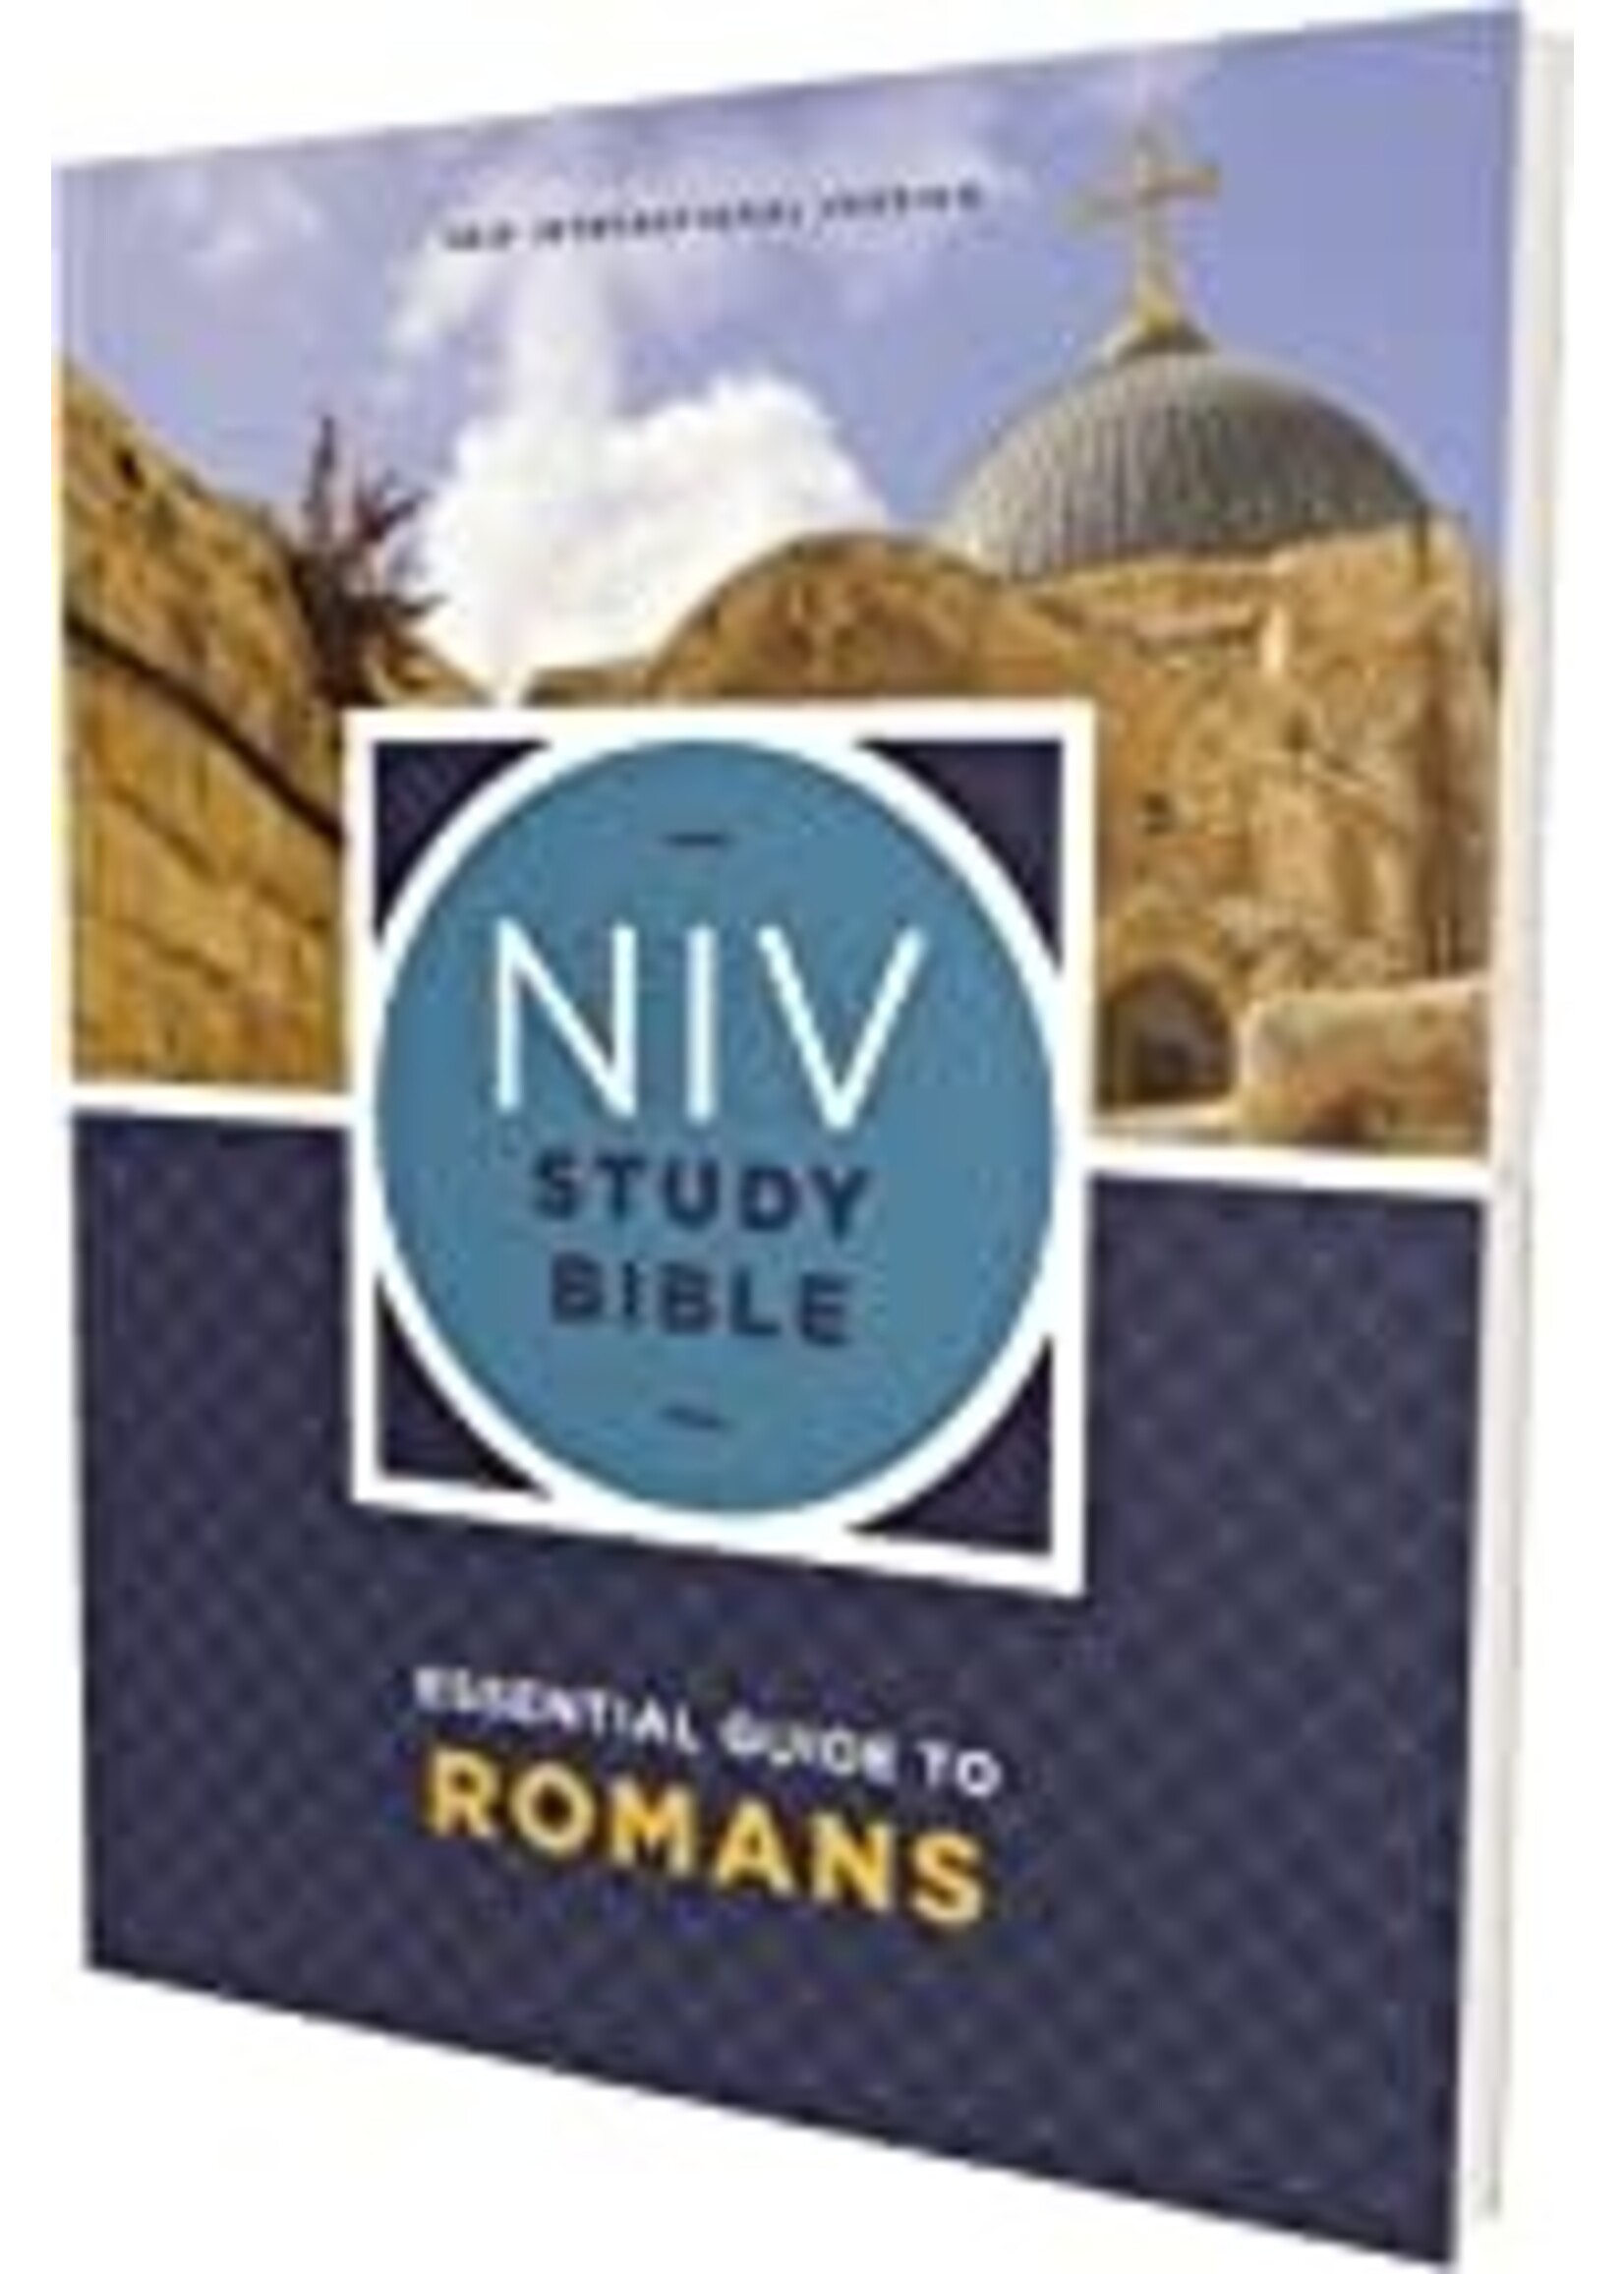 B-NIV STUDY BIBLE ESSENTIAL GUIDE T